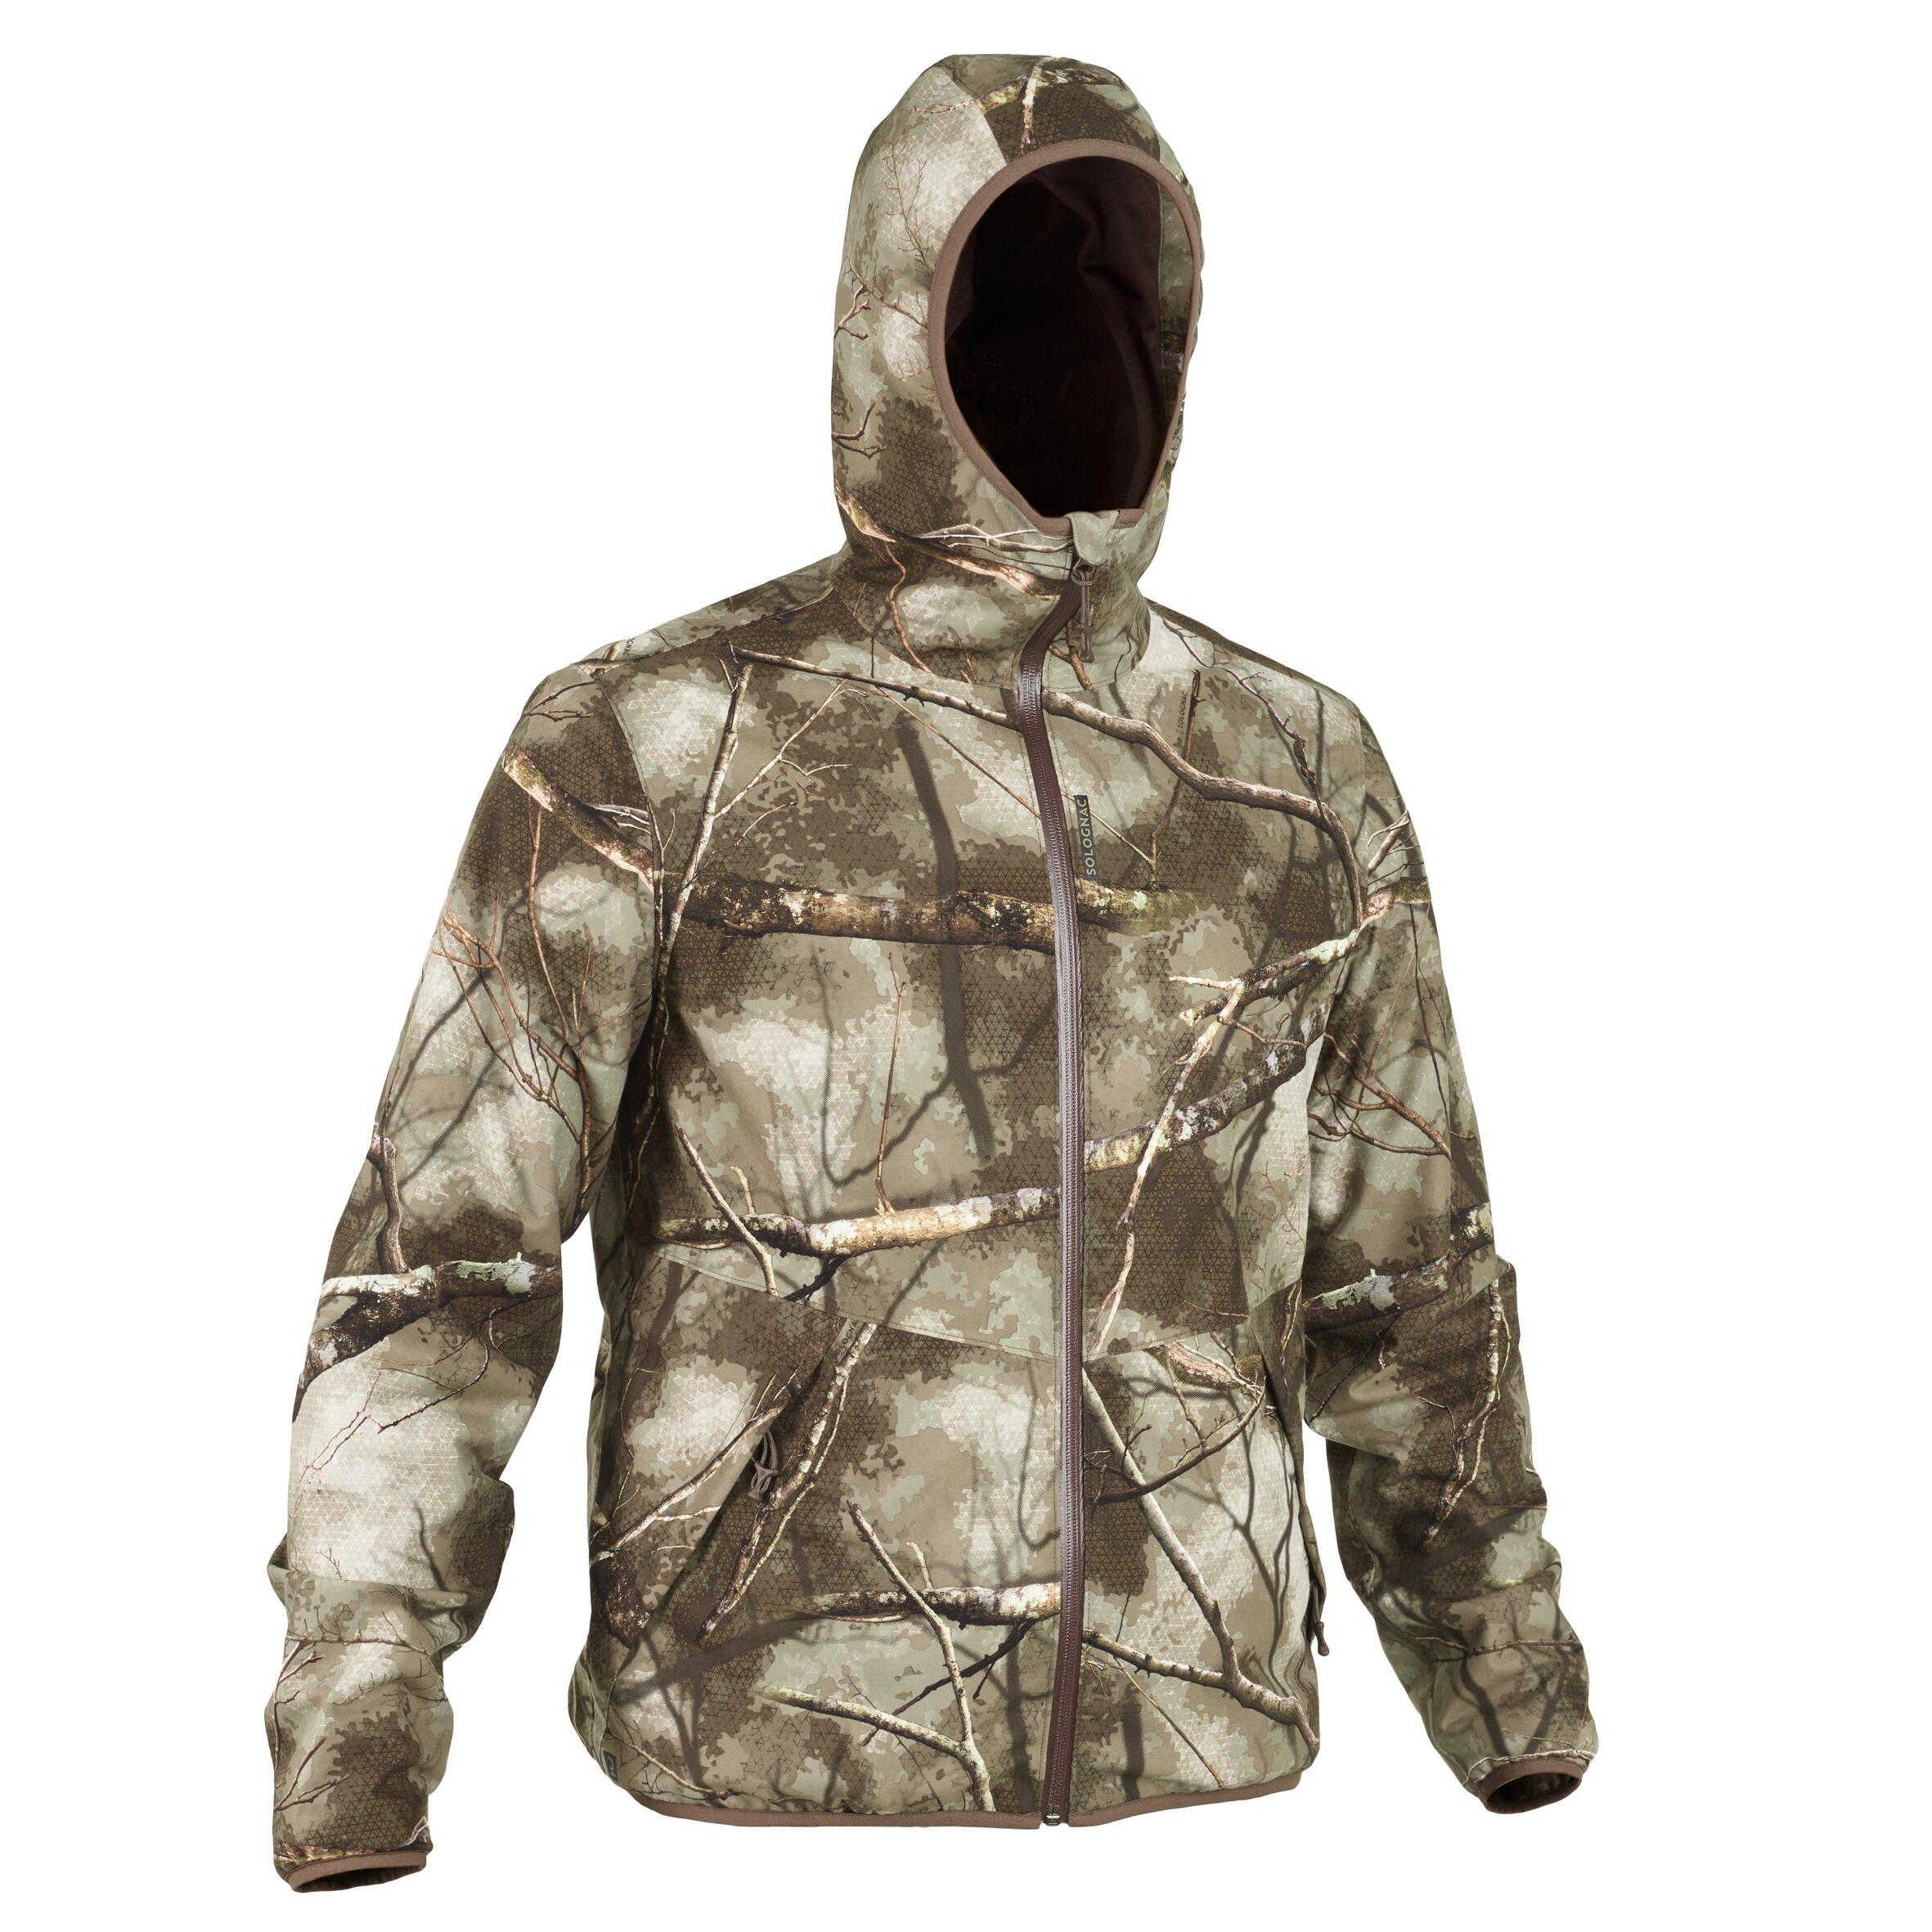 Decathlon Silent Waterproof Hunting Jacket Treemetic 500 Camouflage